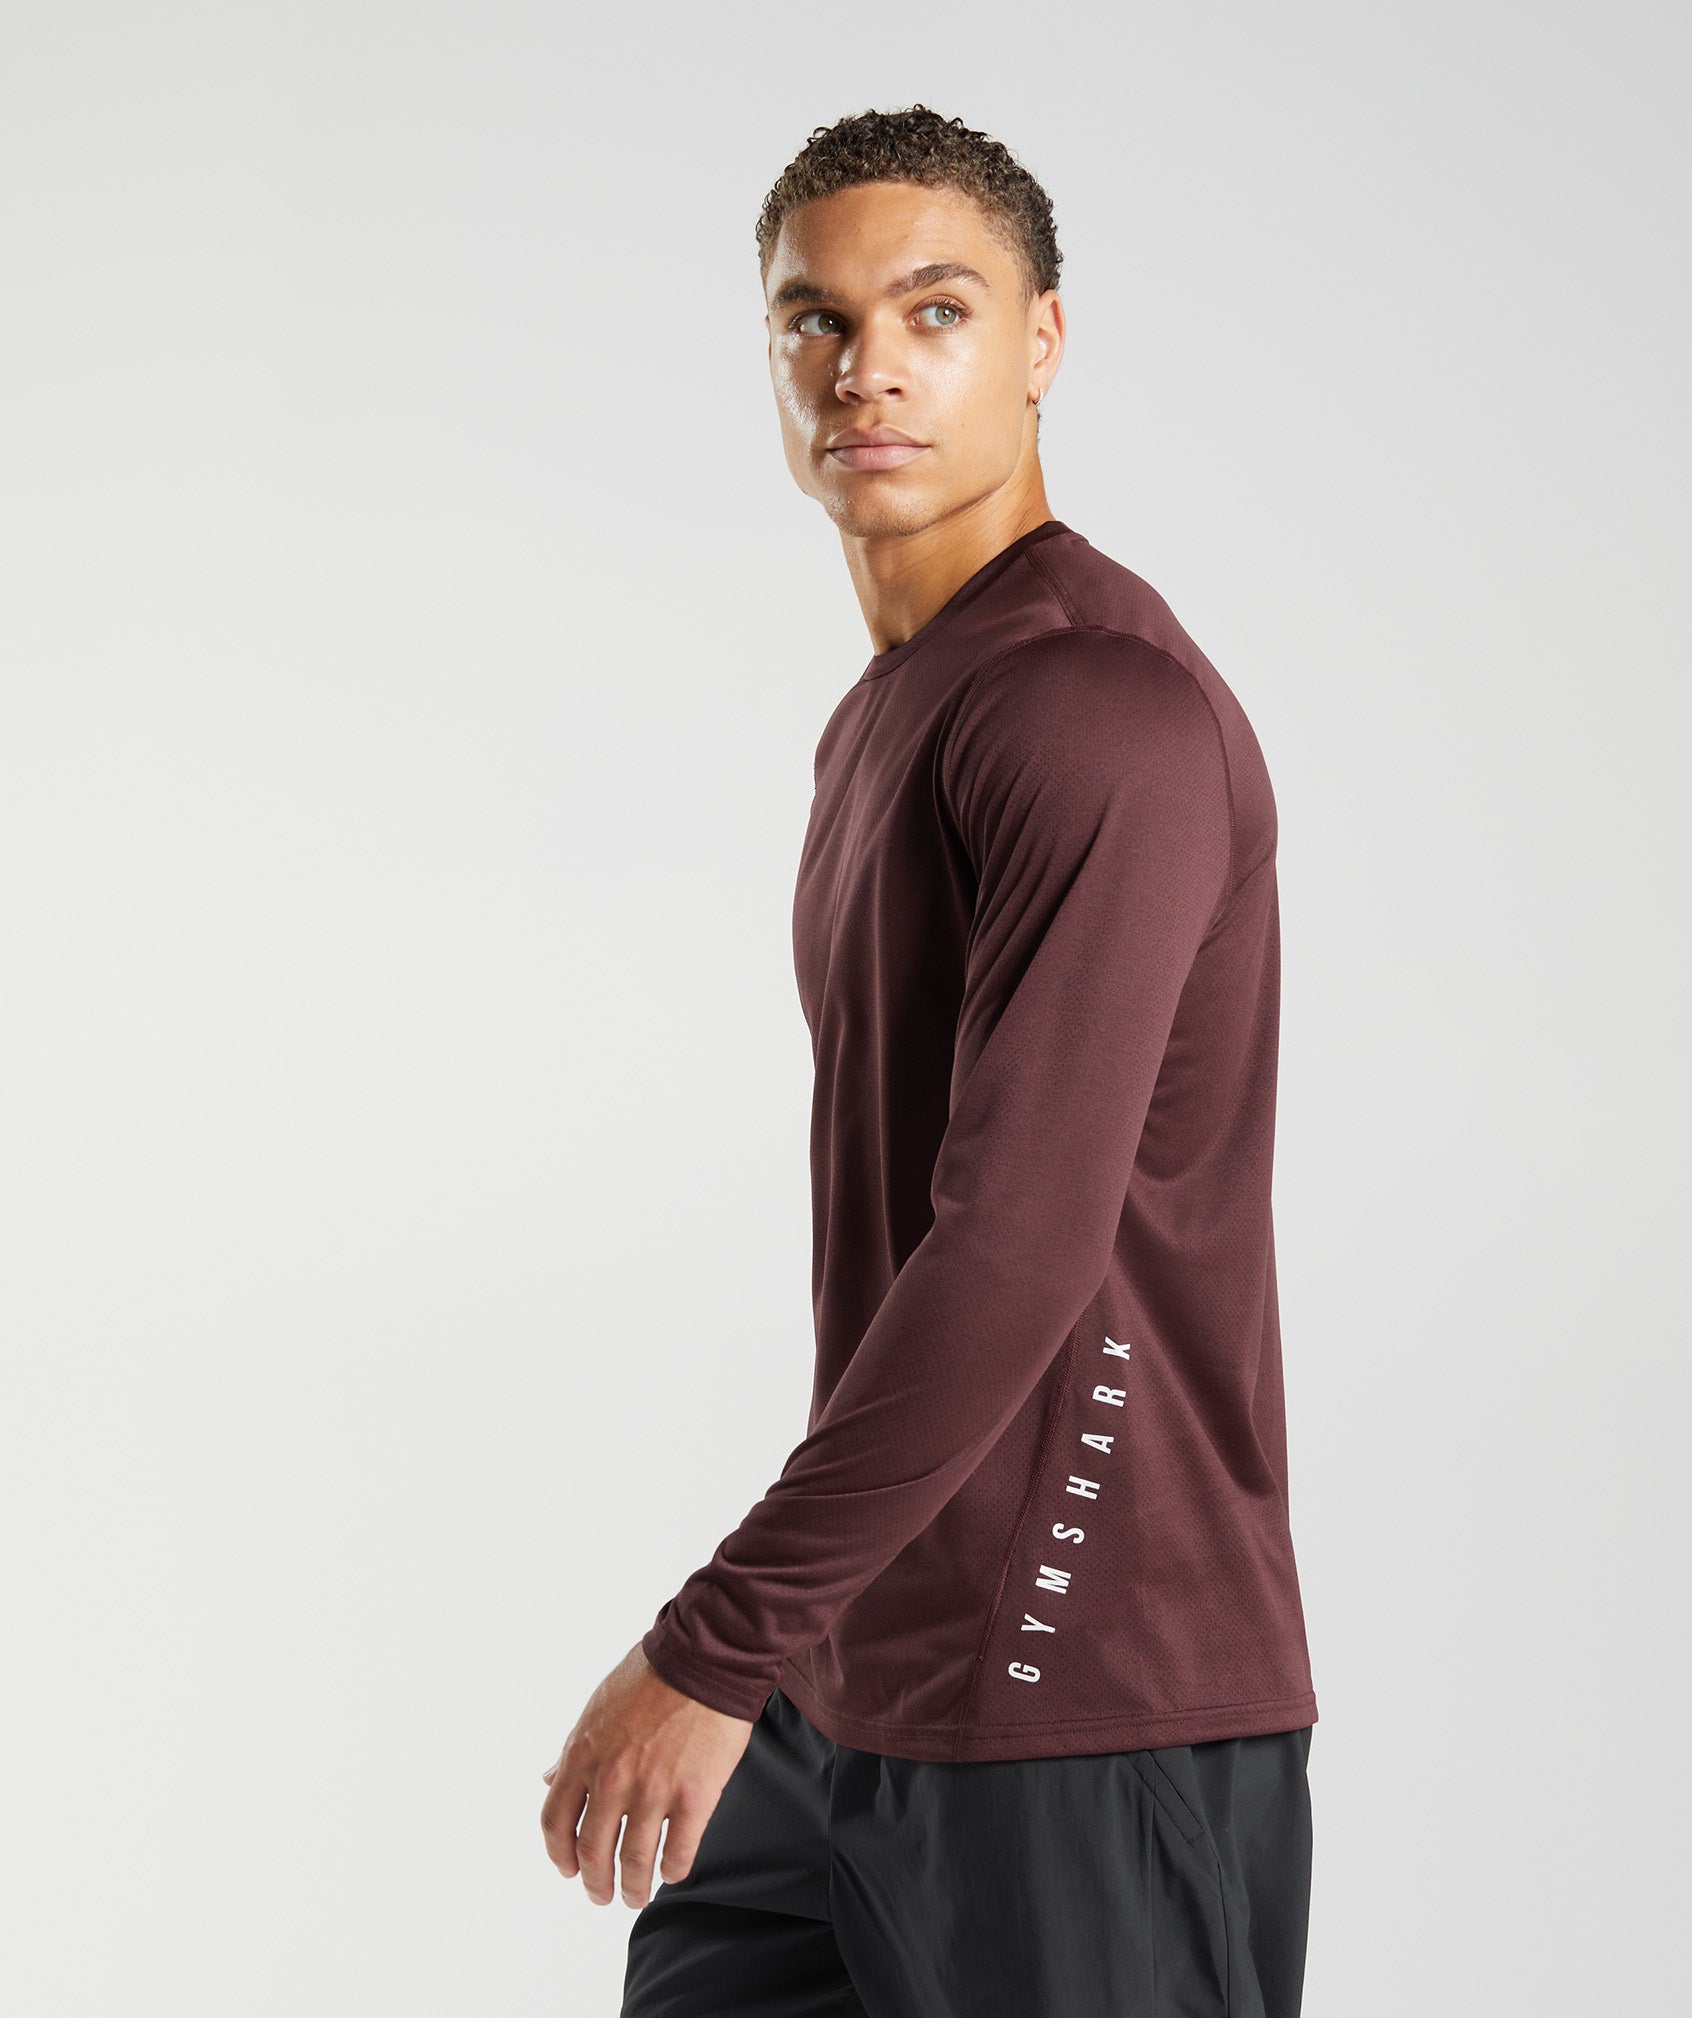 Gymshark Sport Long Sleeve T-shirts Herren Bordeaux Schwarz | 1423605-MZ